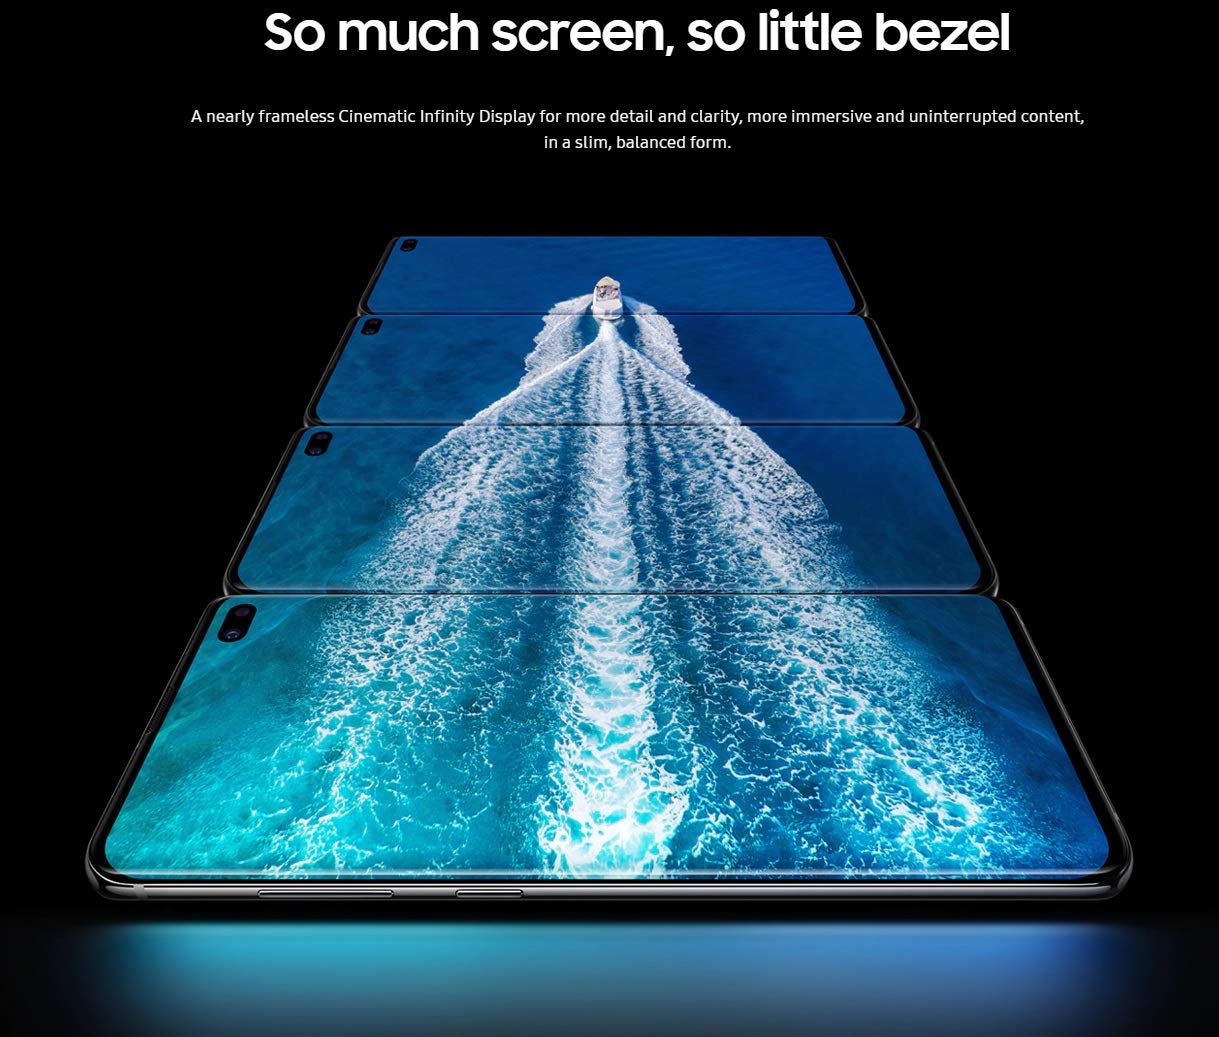 Samsung Galaxy S10+, 128GB, Prism White - T-Mobile (Renewed)